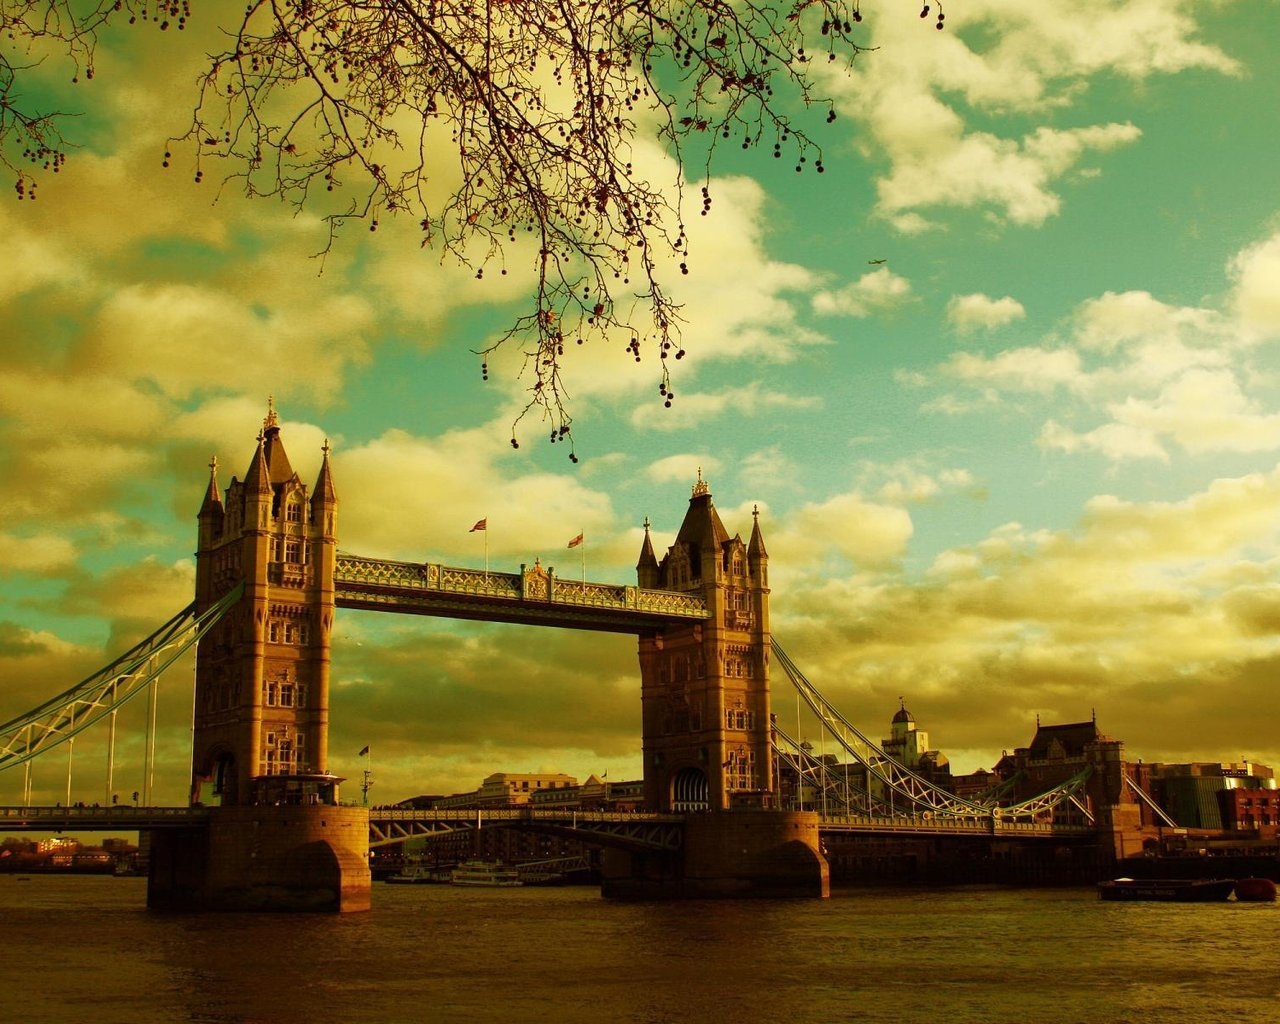 London Tower Bridge for 1280 x 1024 resolution